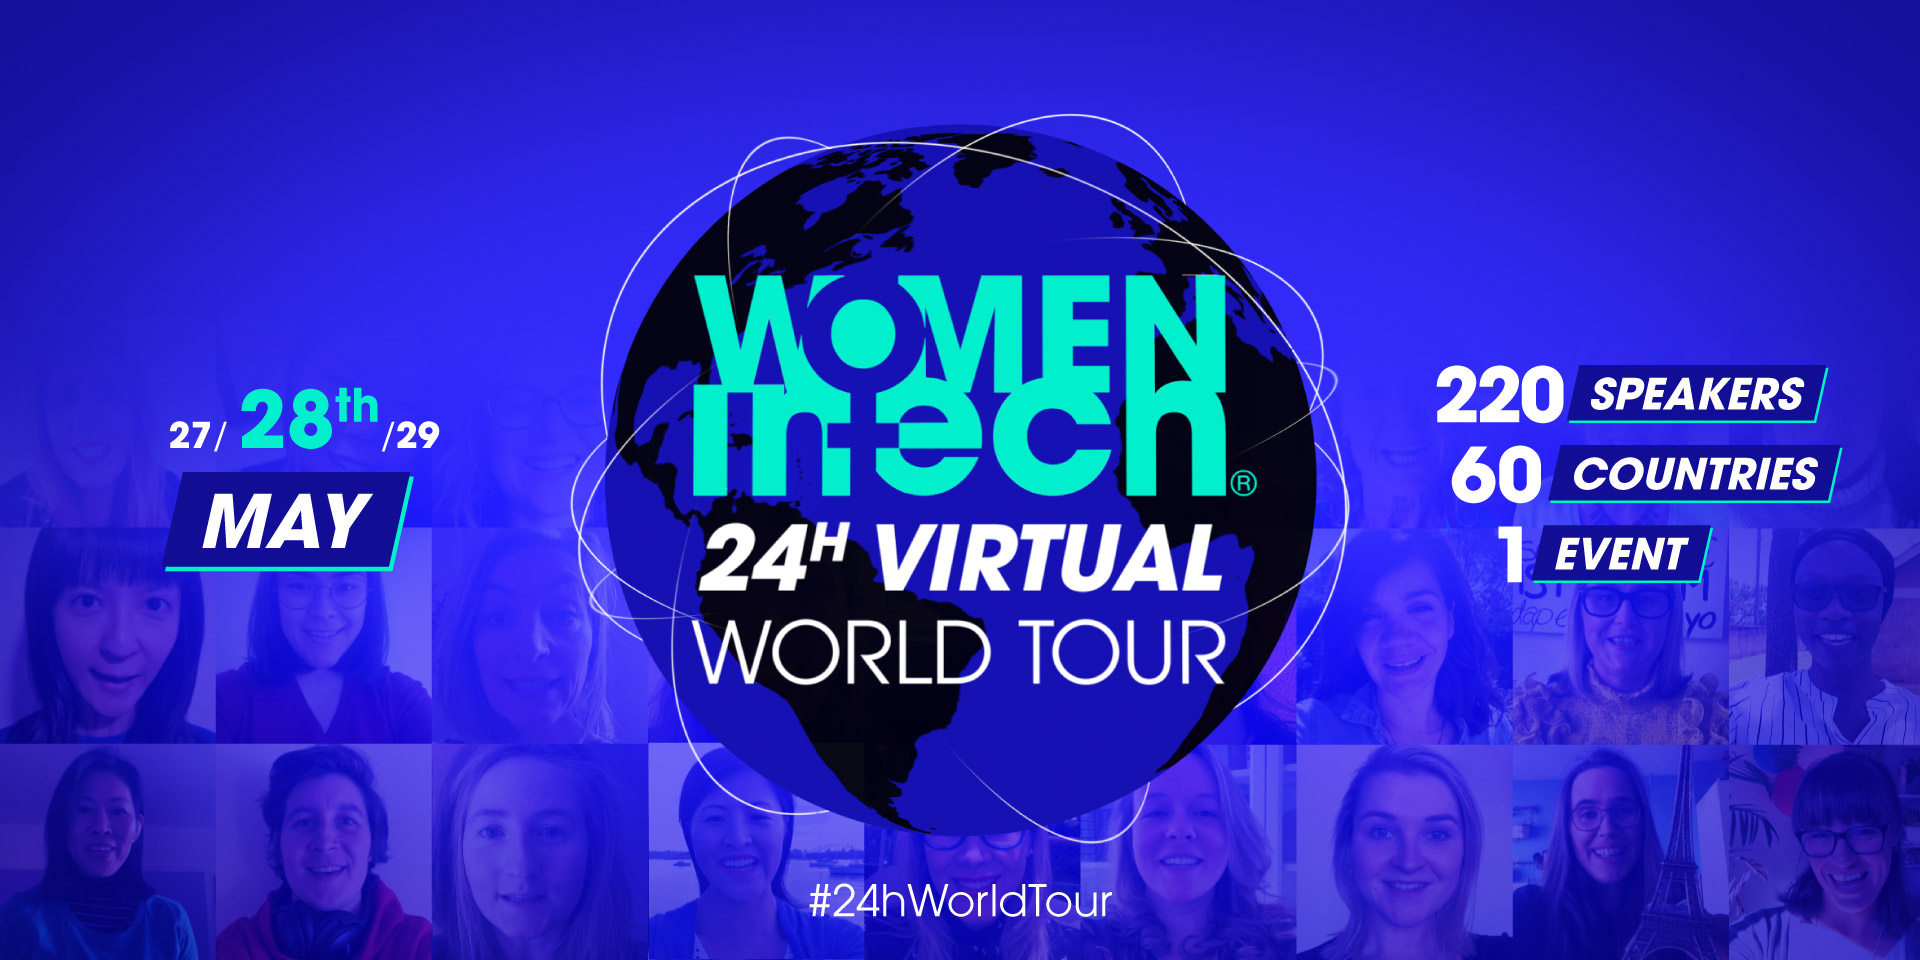 Women in Tech 24h Virtual World Tour